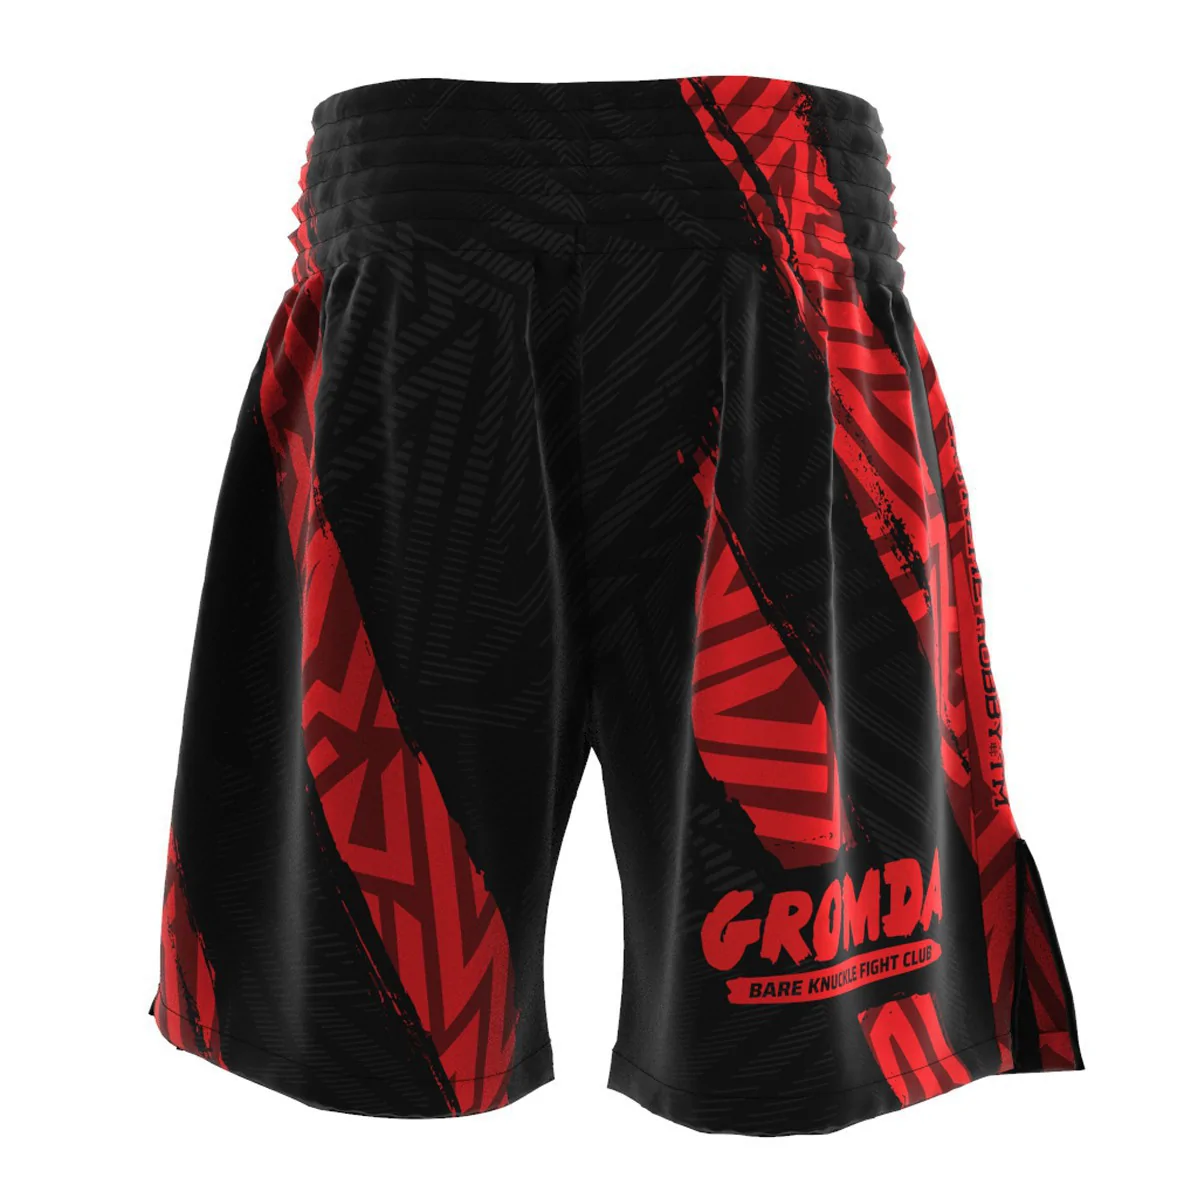 Pantalones cortos de boxeo para hombre GROMDA BARE KNUCKLE Extreme Hobby